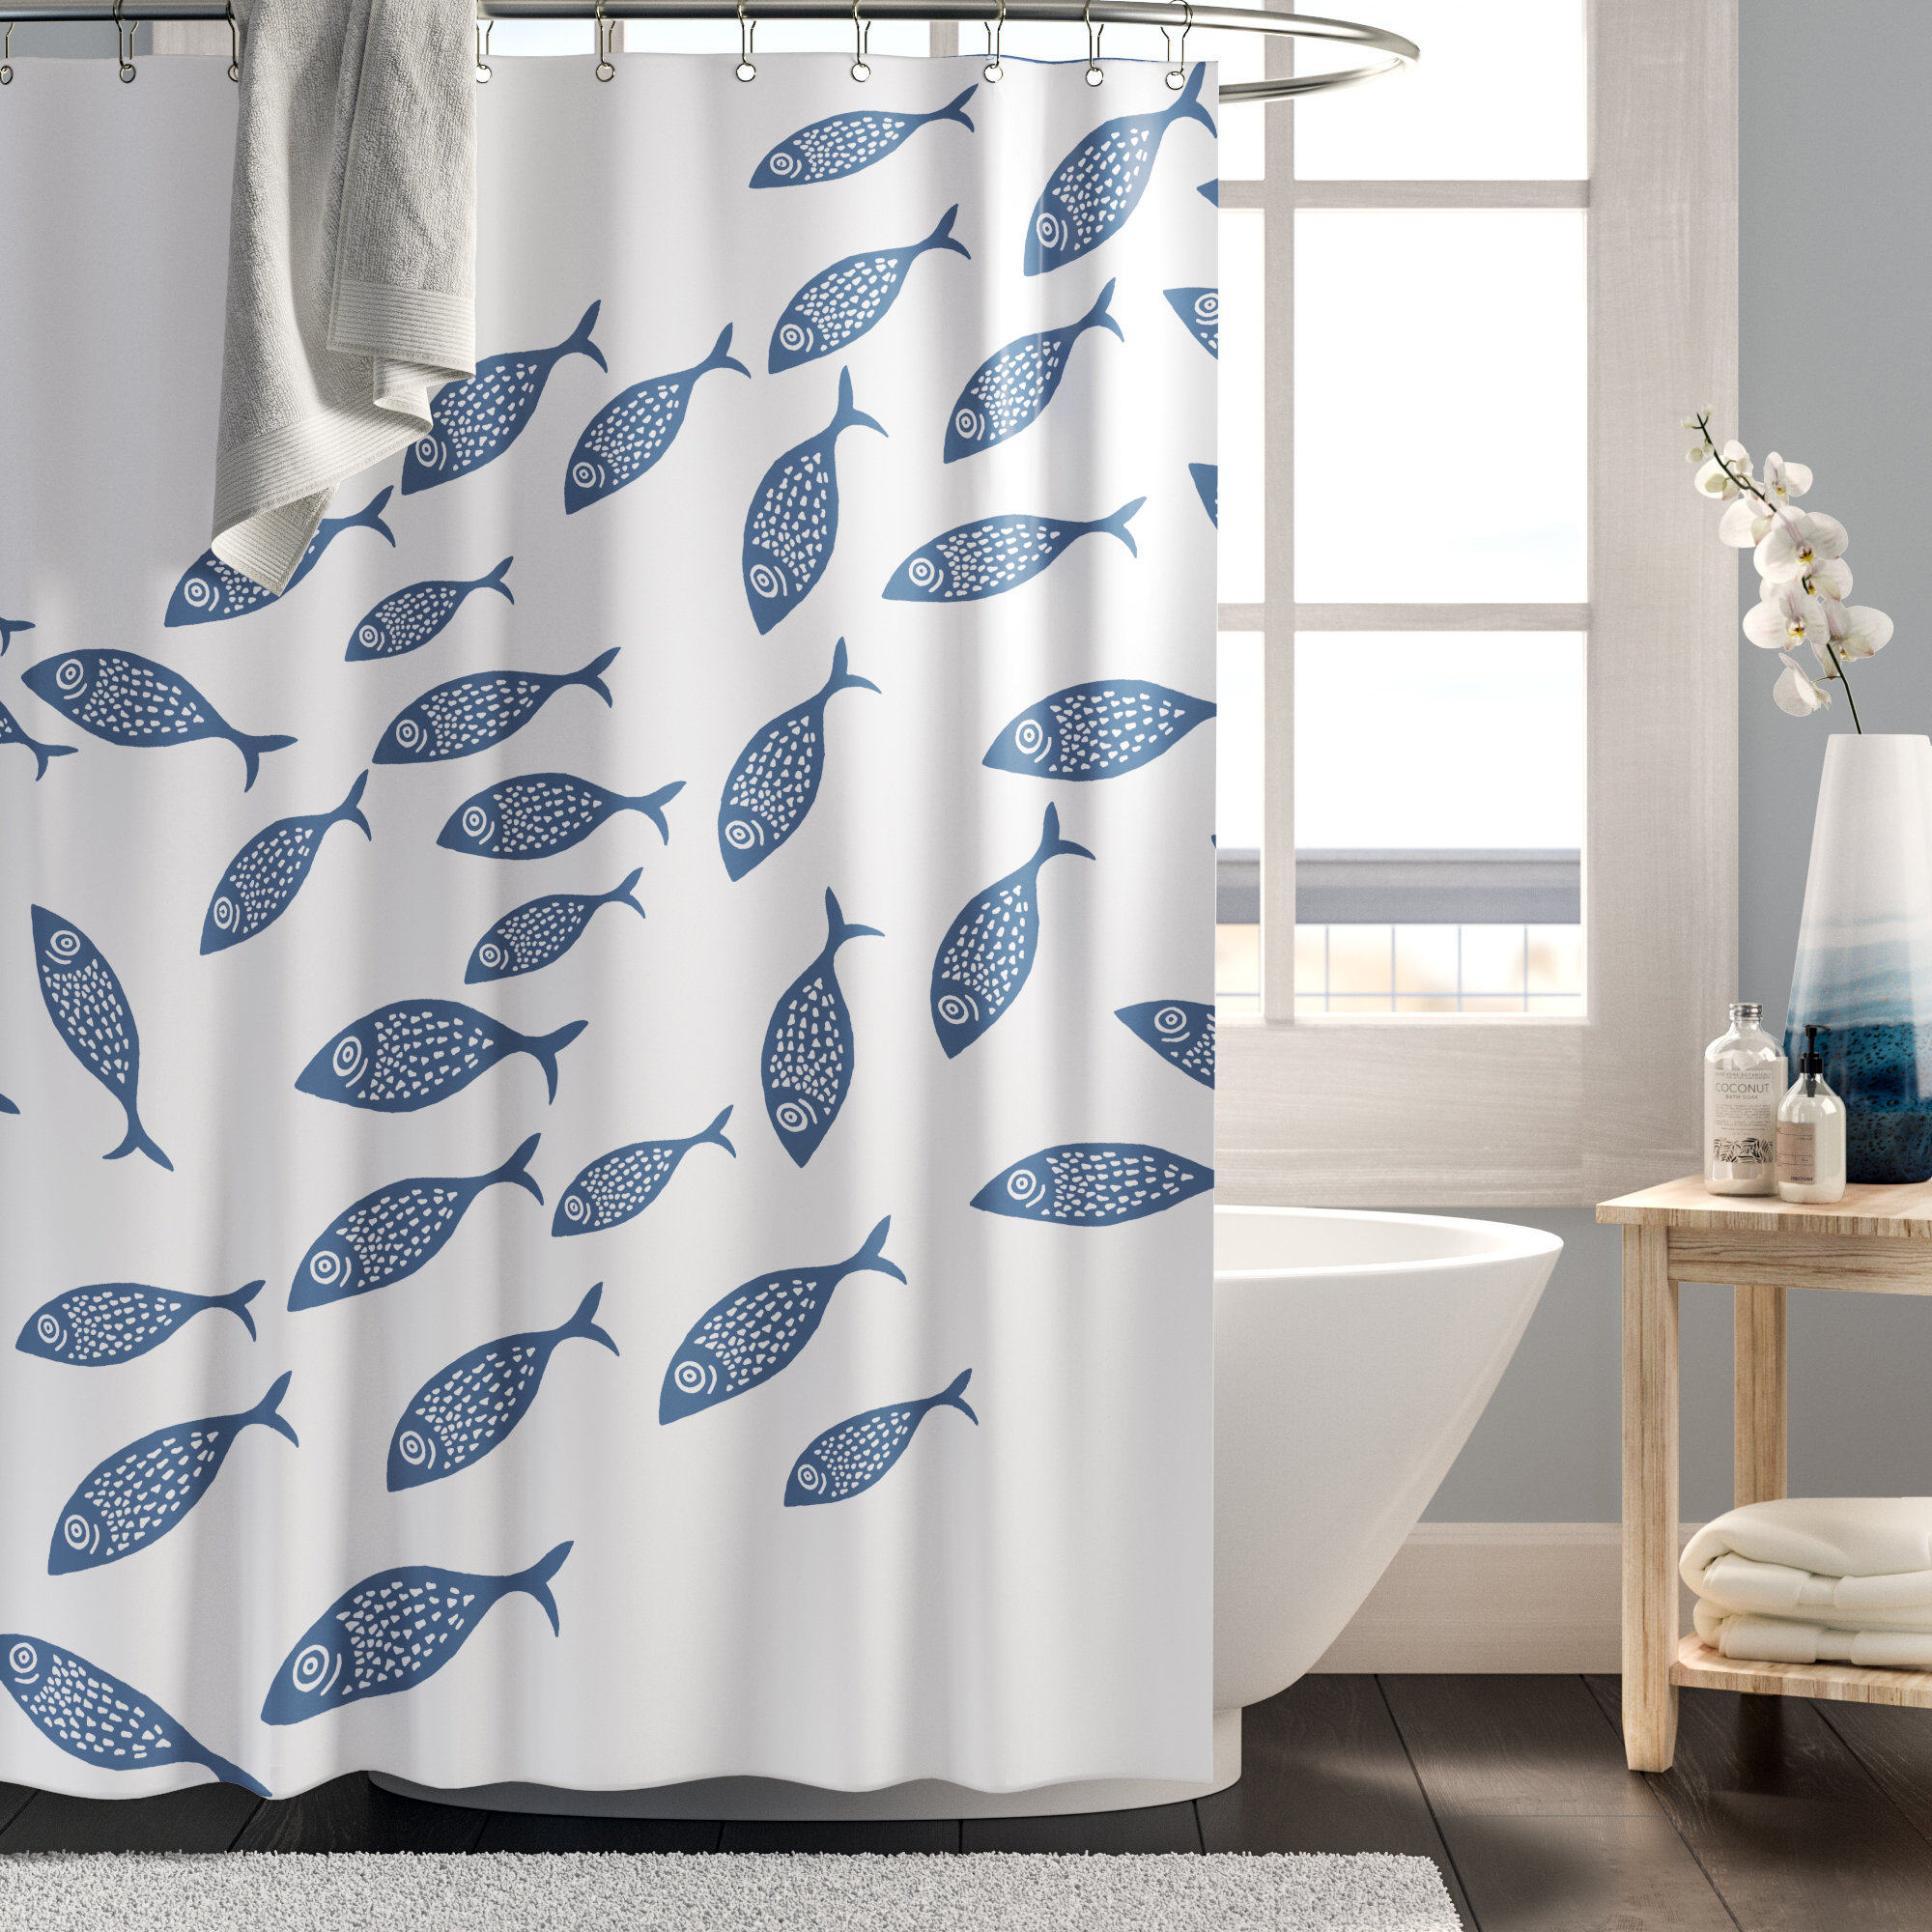 Anime Shower Curtain Fabric Bathroom Decor Set with Hooks 4 Sizes 